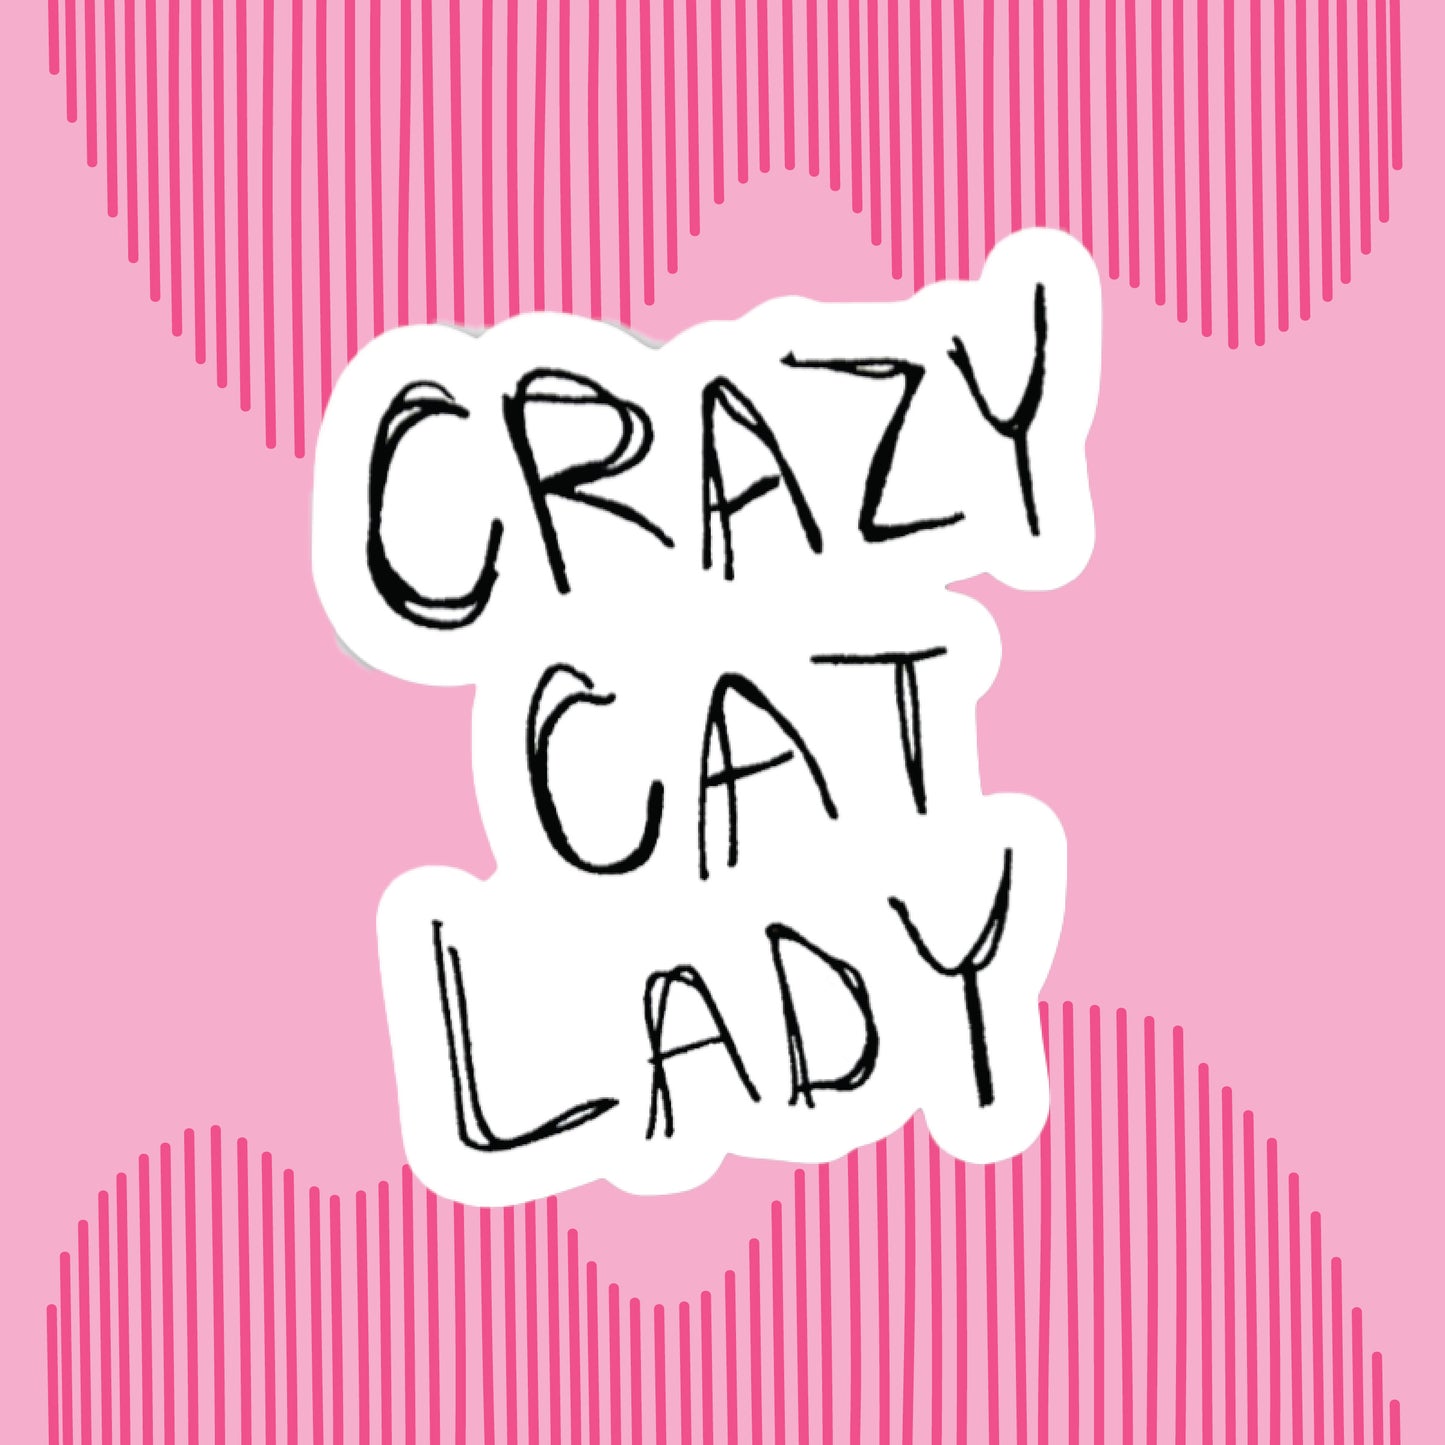 "Crazy Cat Lady" Sticker